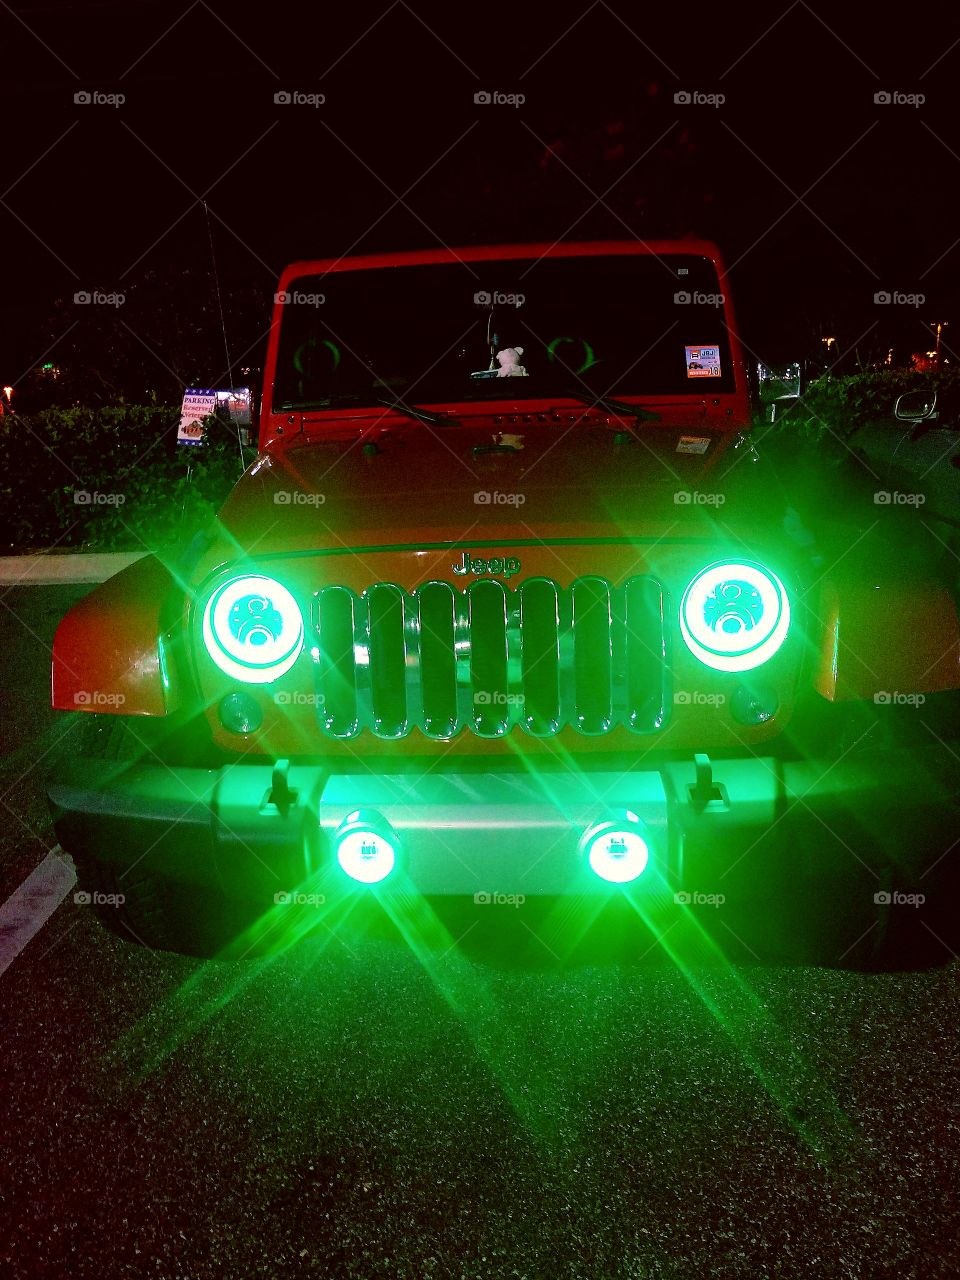 Jeep with green lights. nice